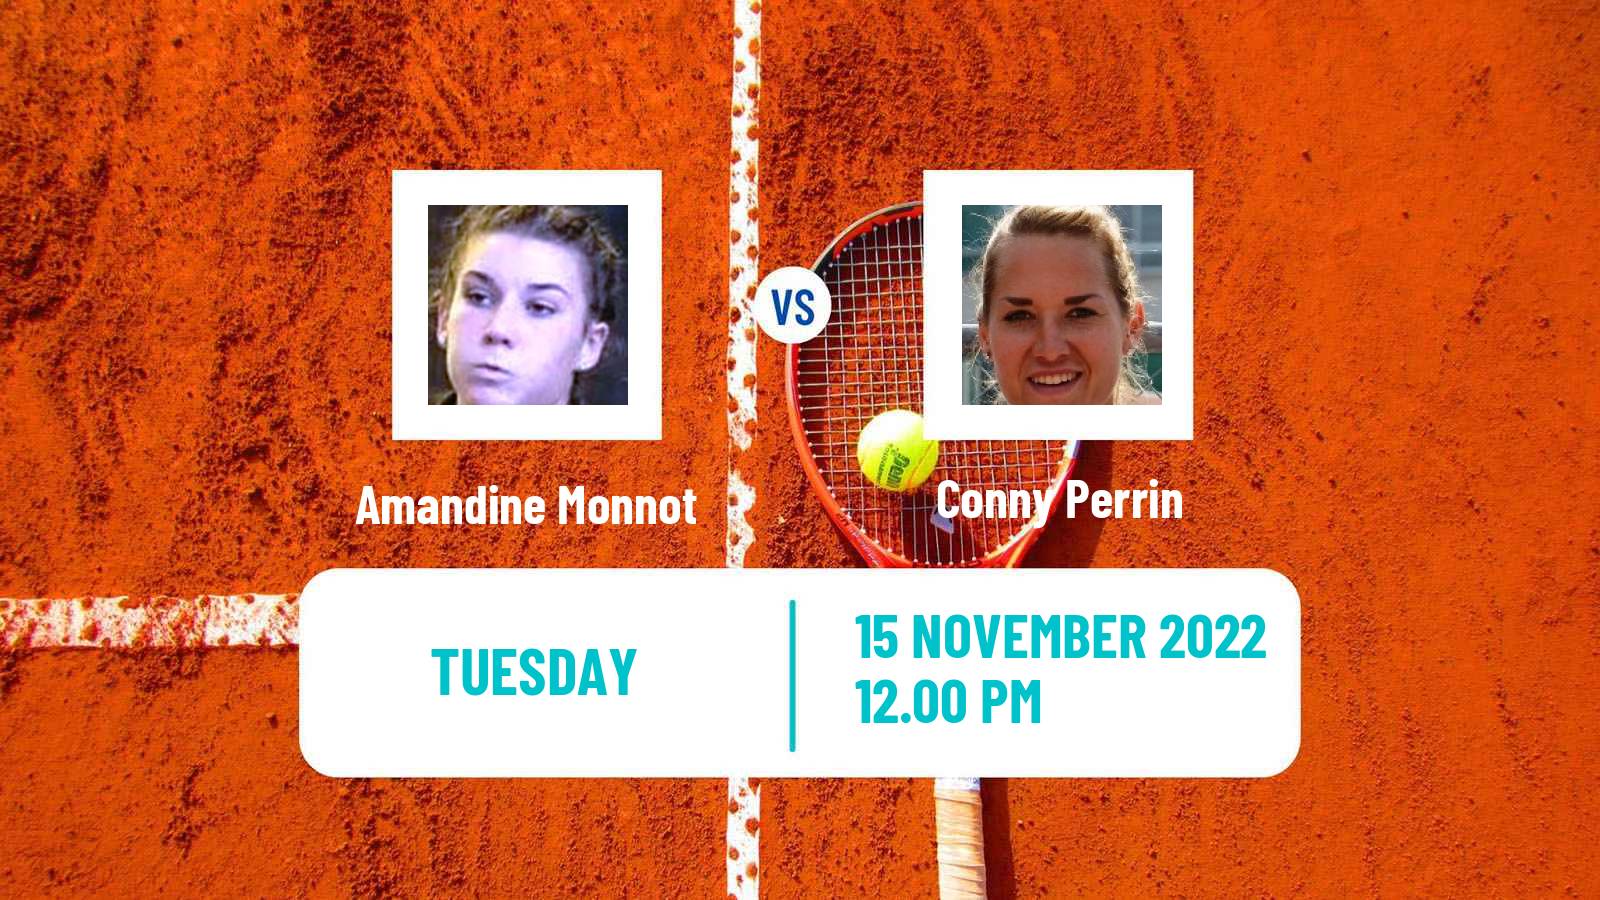 Tennis ITF Tournaments Amandine Monnot - Conny Perrin